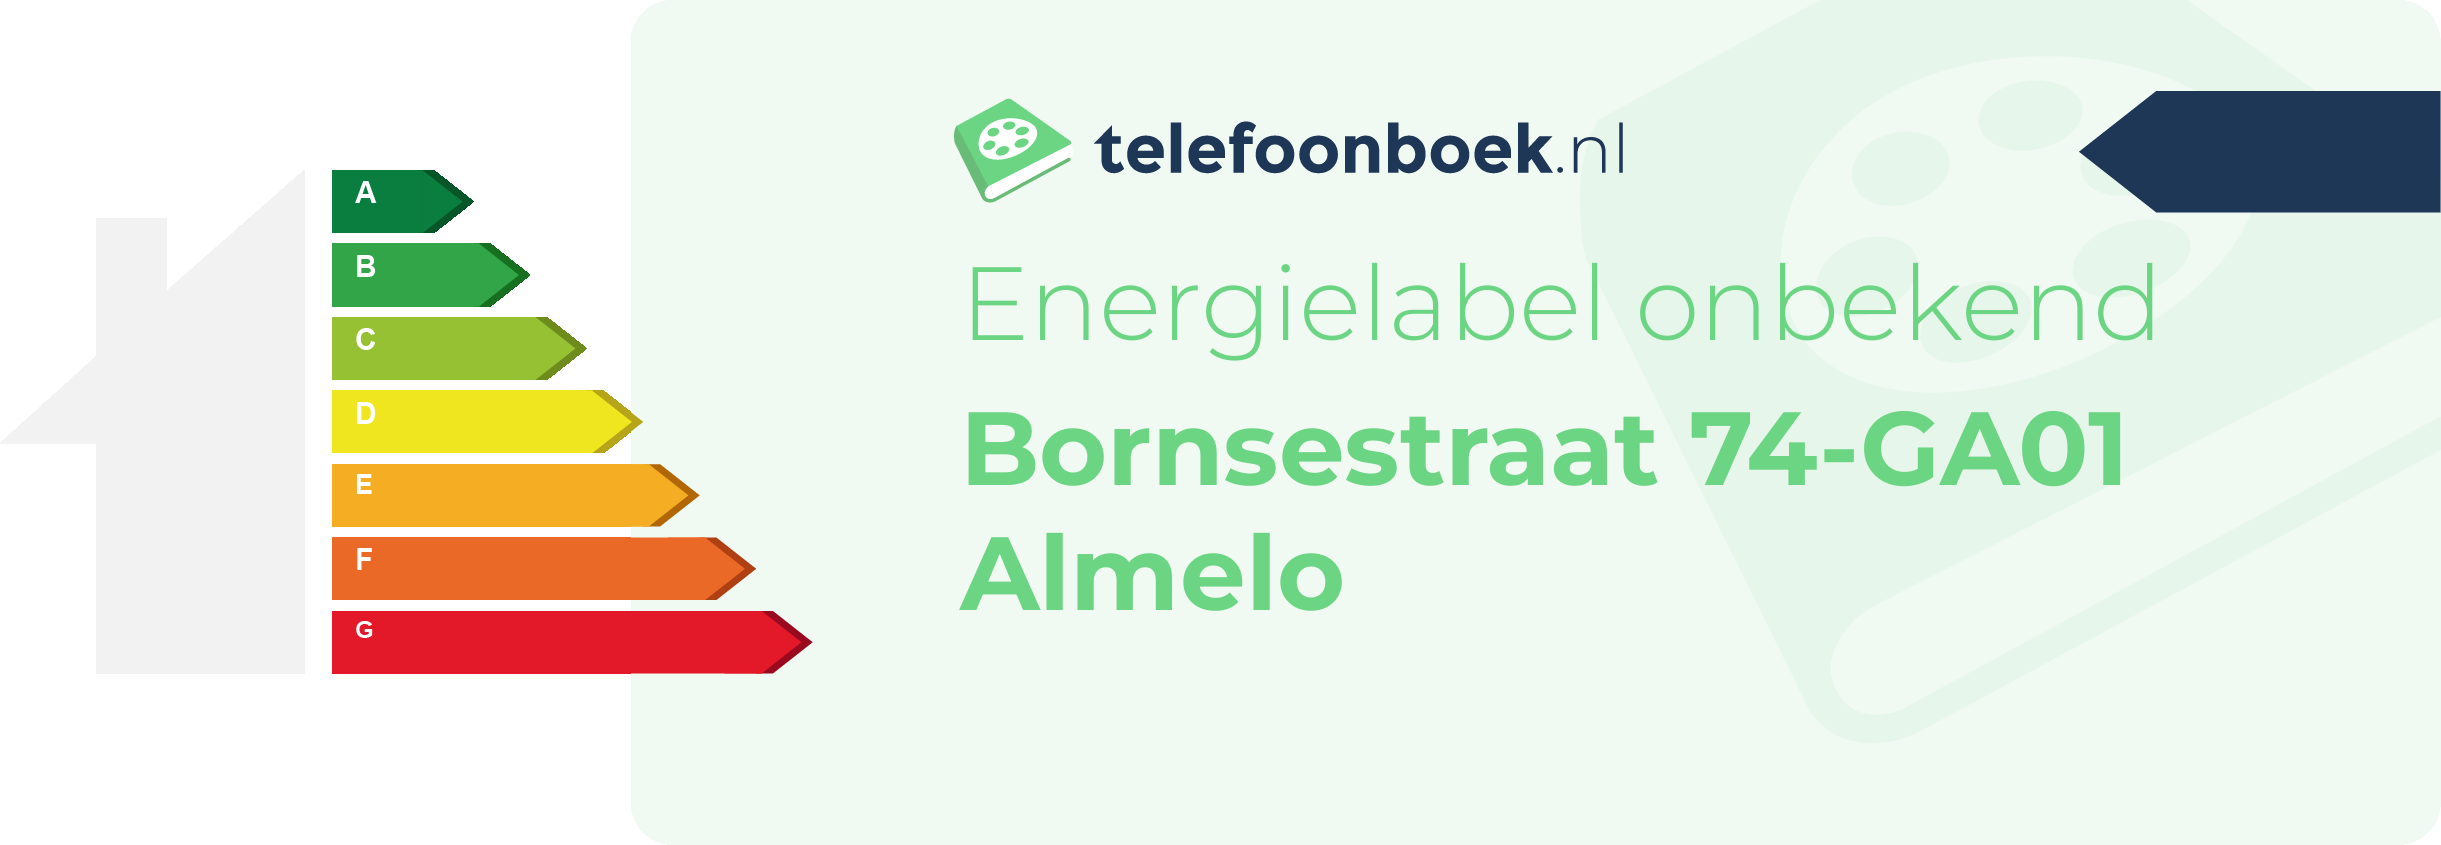 Energielabel Bornsestraat 74-GA01 Almelo